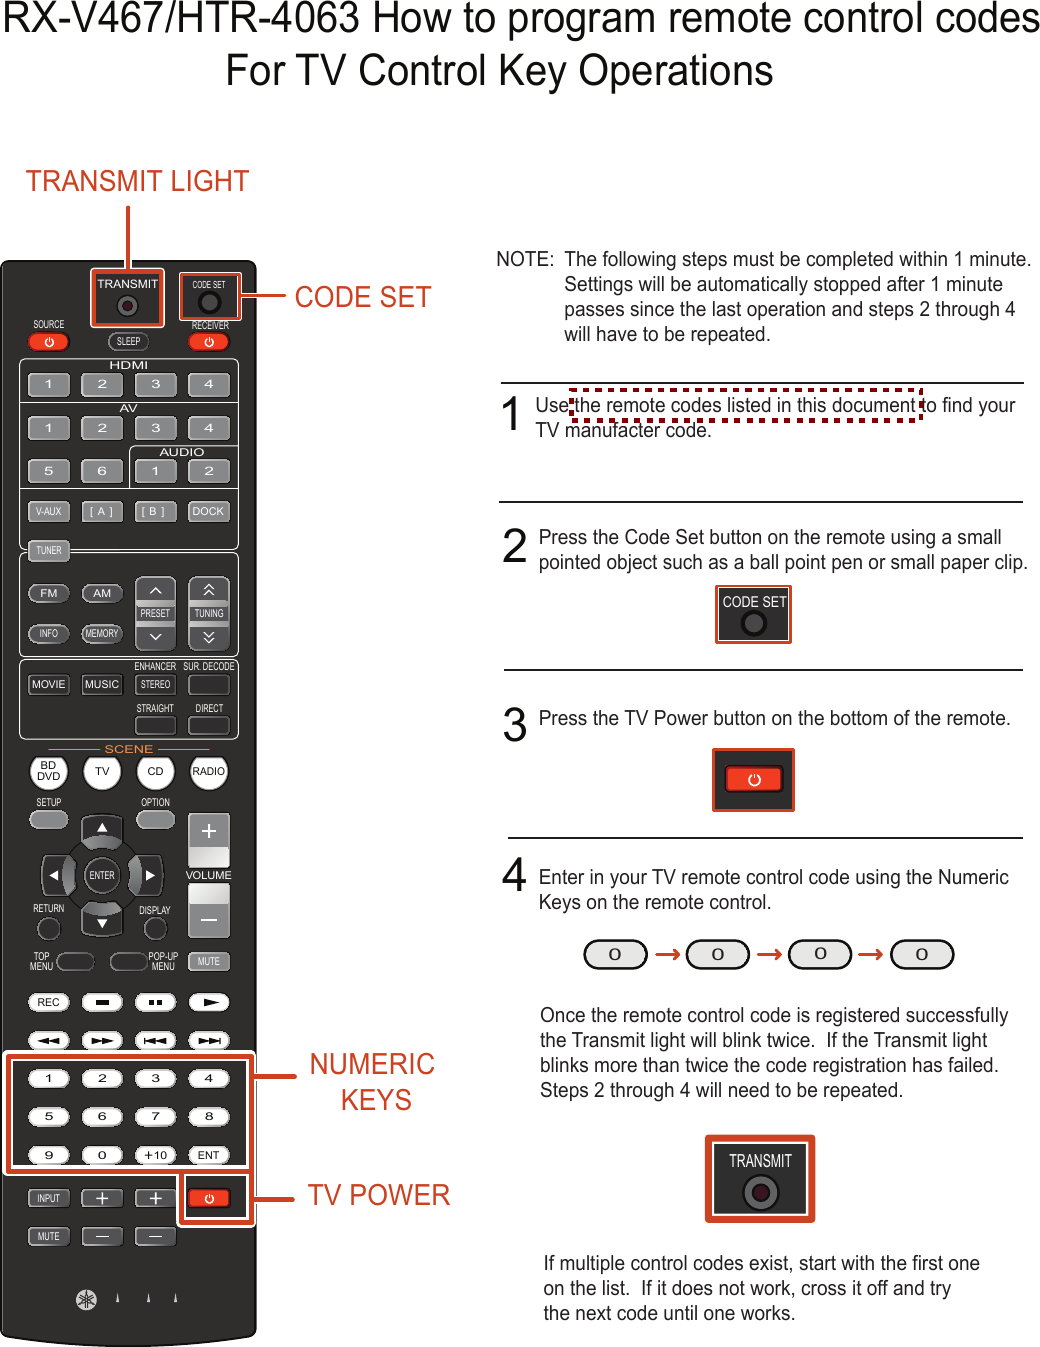 Page 1 of 5 - Yamaha 01_om_rx-v467 RX-V467 How Do I Program My TV Remote Control Codes Into The HTR 4063 Programing For Key Operations